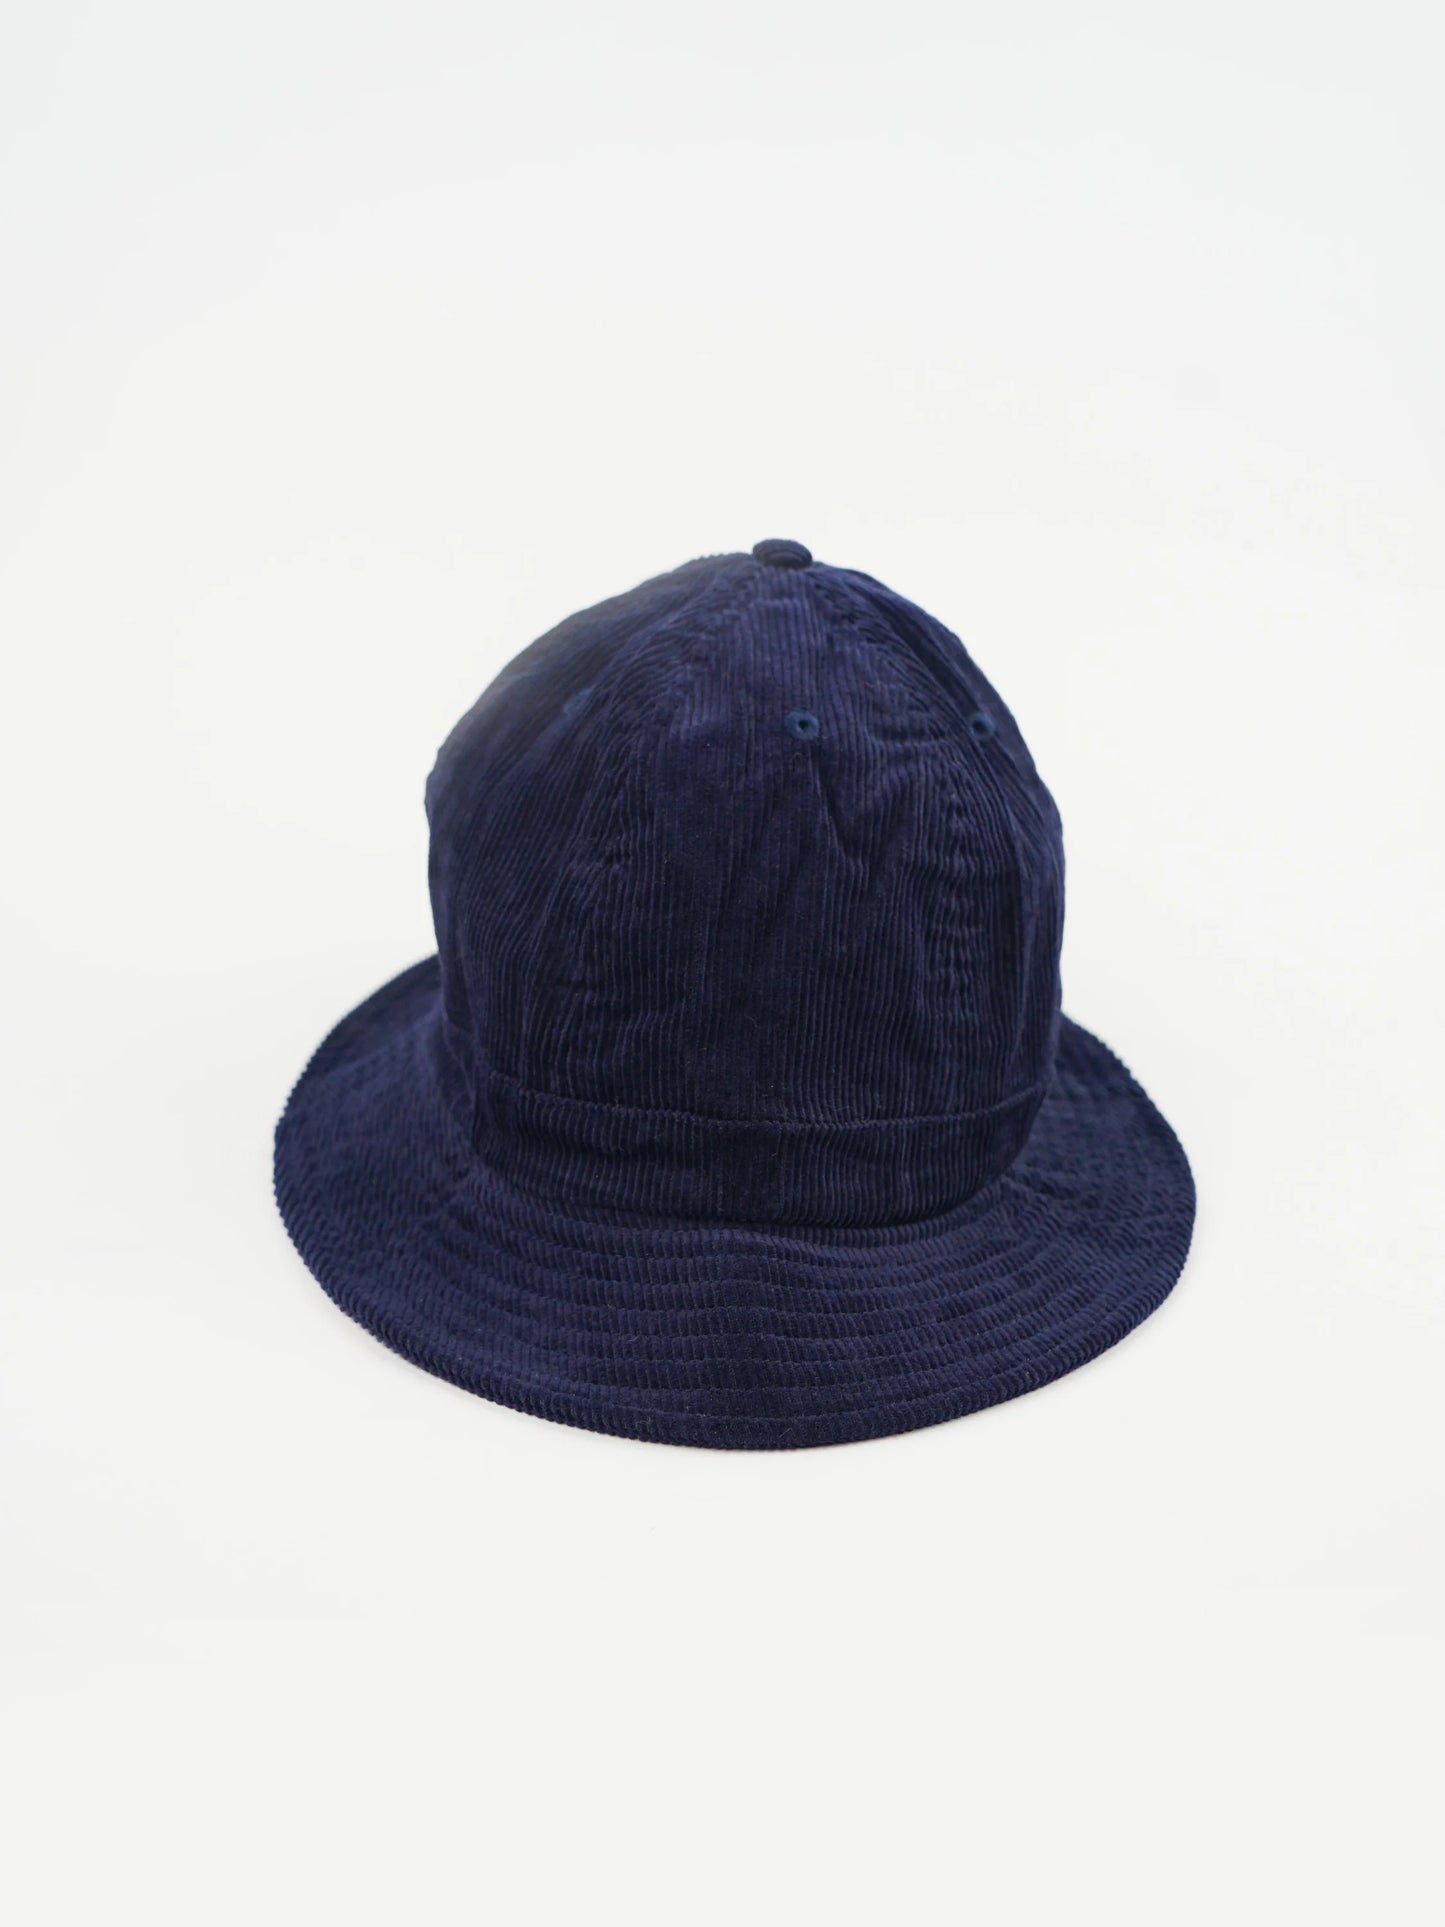 Cords Bucket Hat - 3 colors